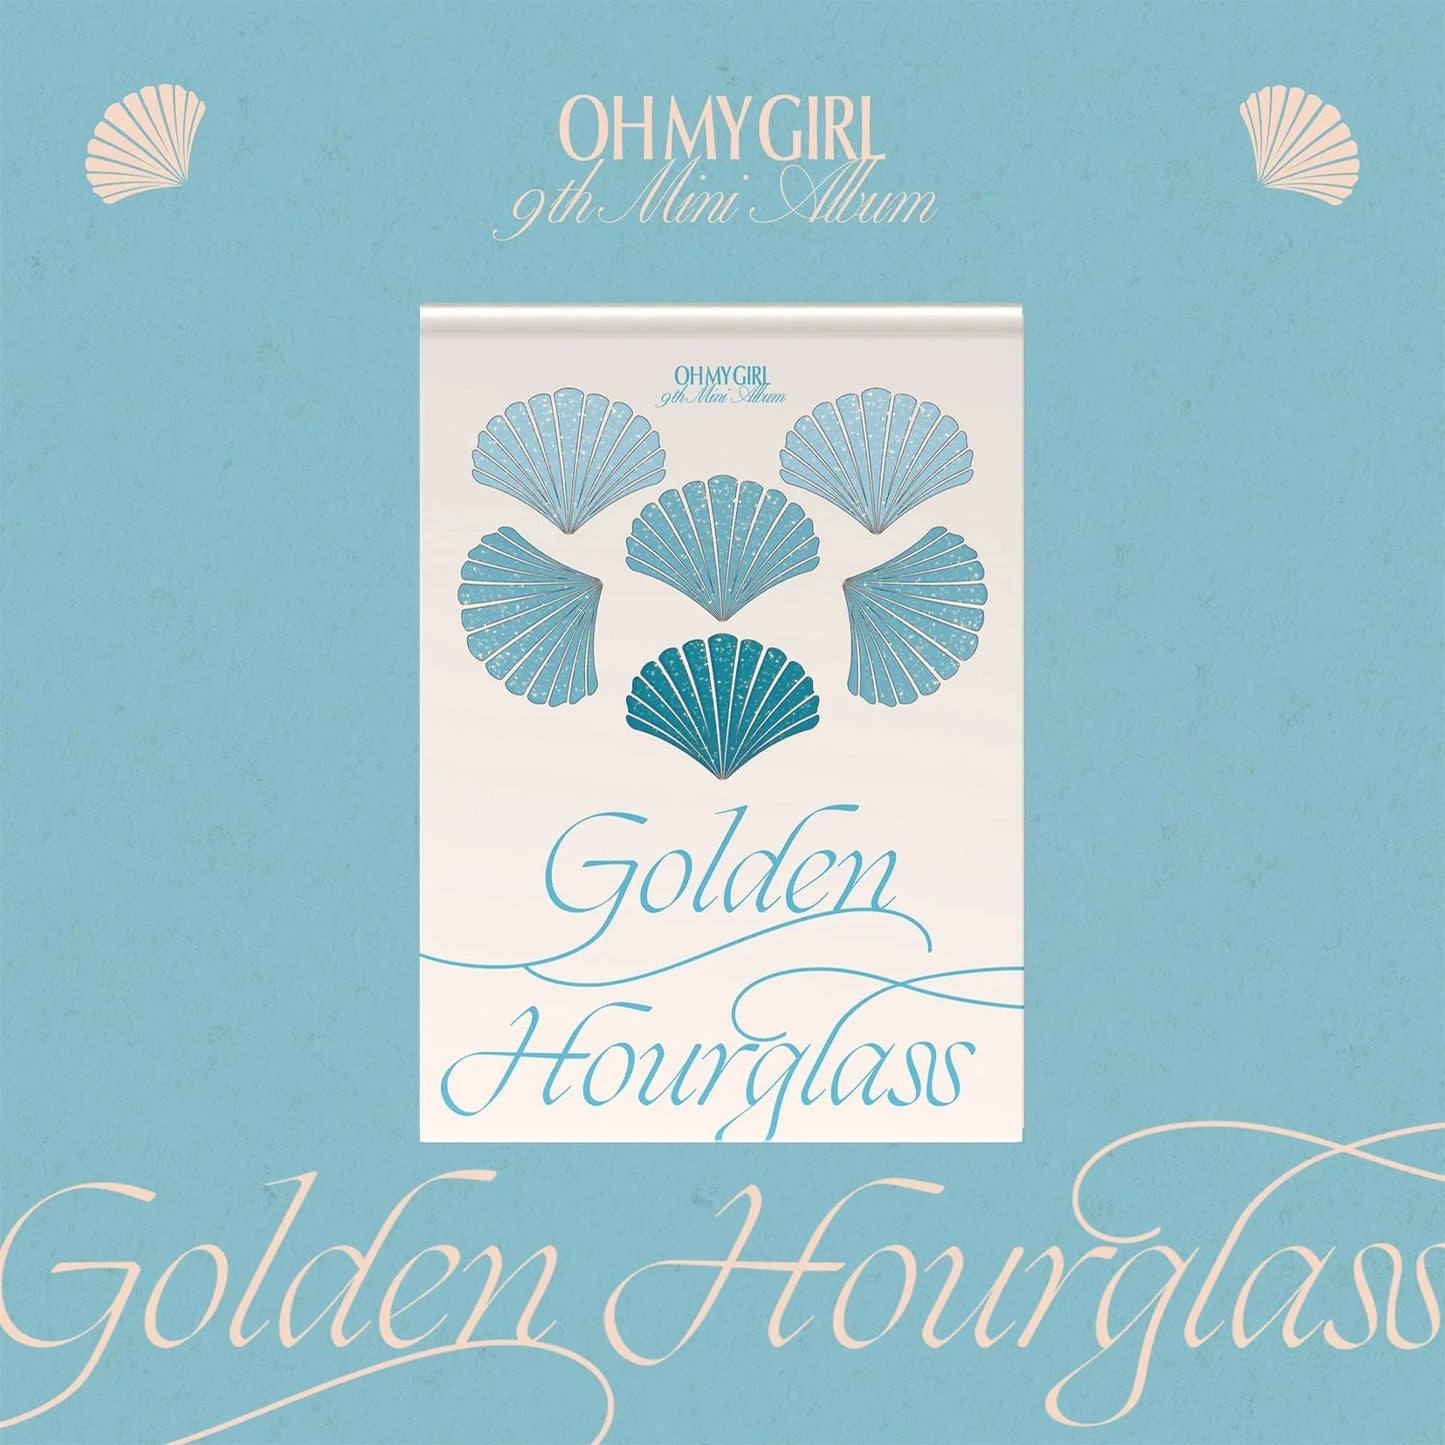 OH MY GIRL - 9th Mini-Album 'Golden Hourglass'